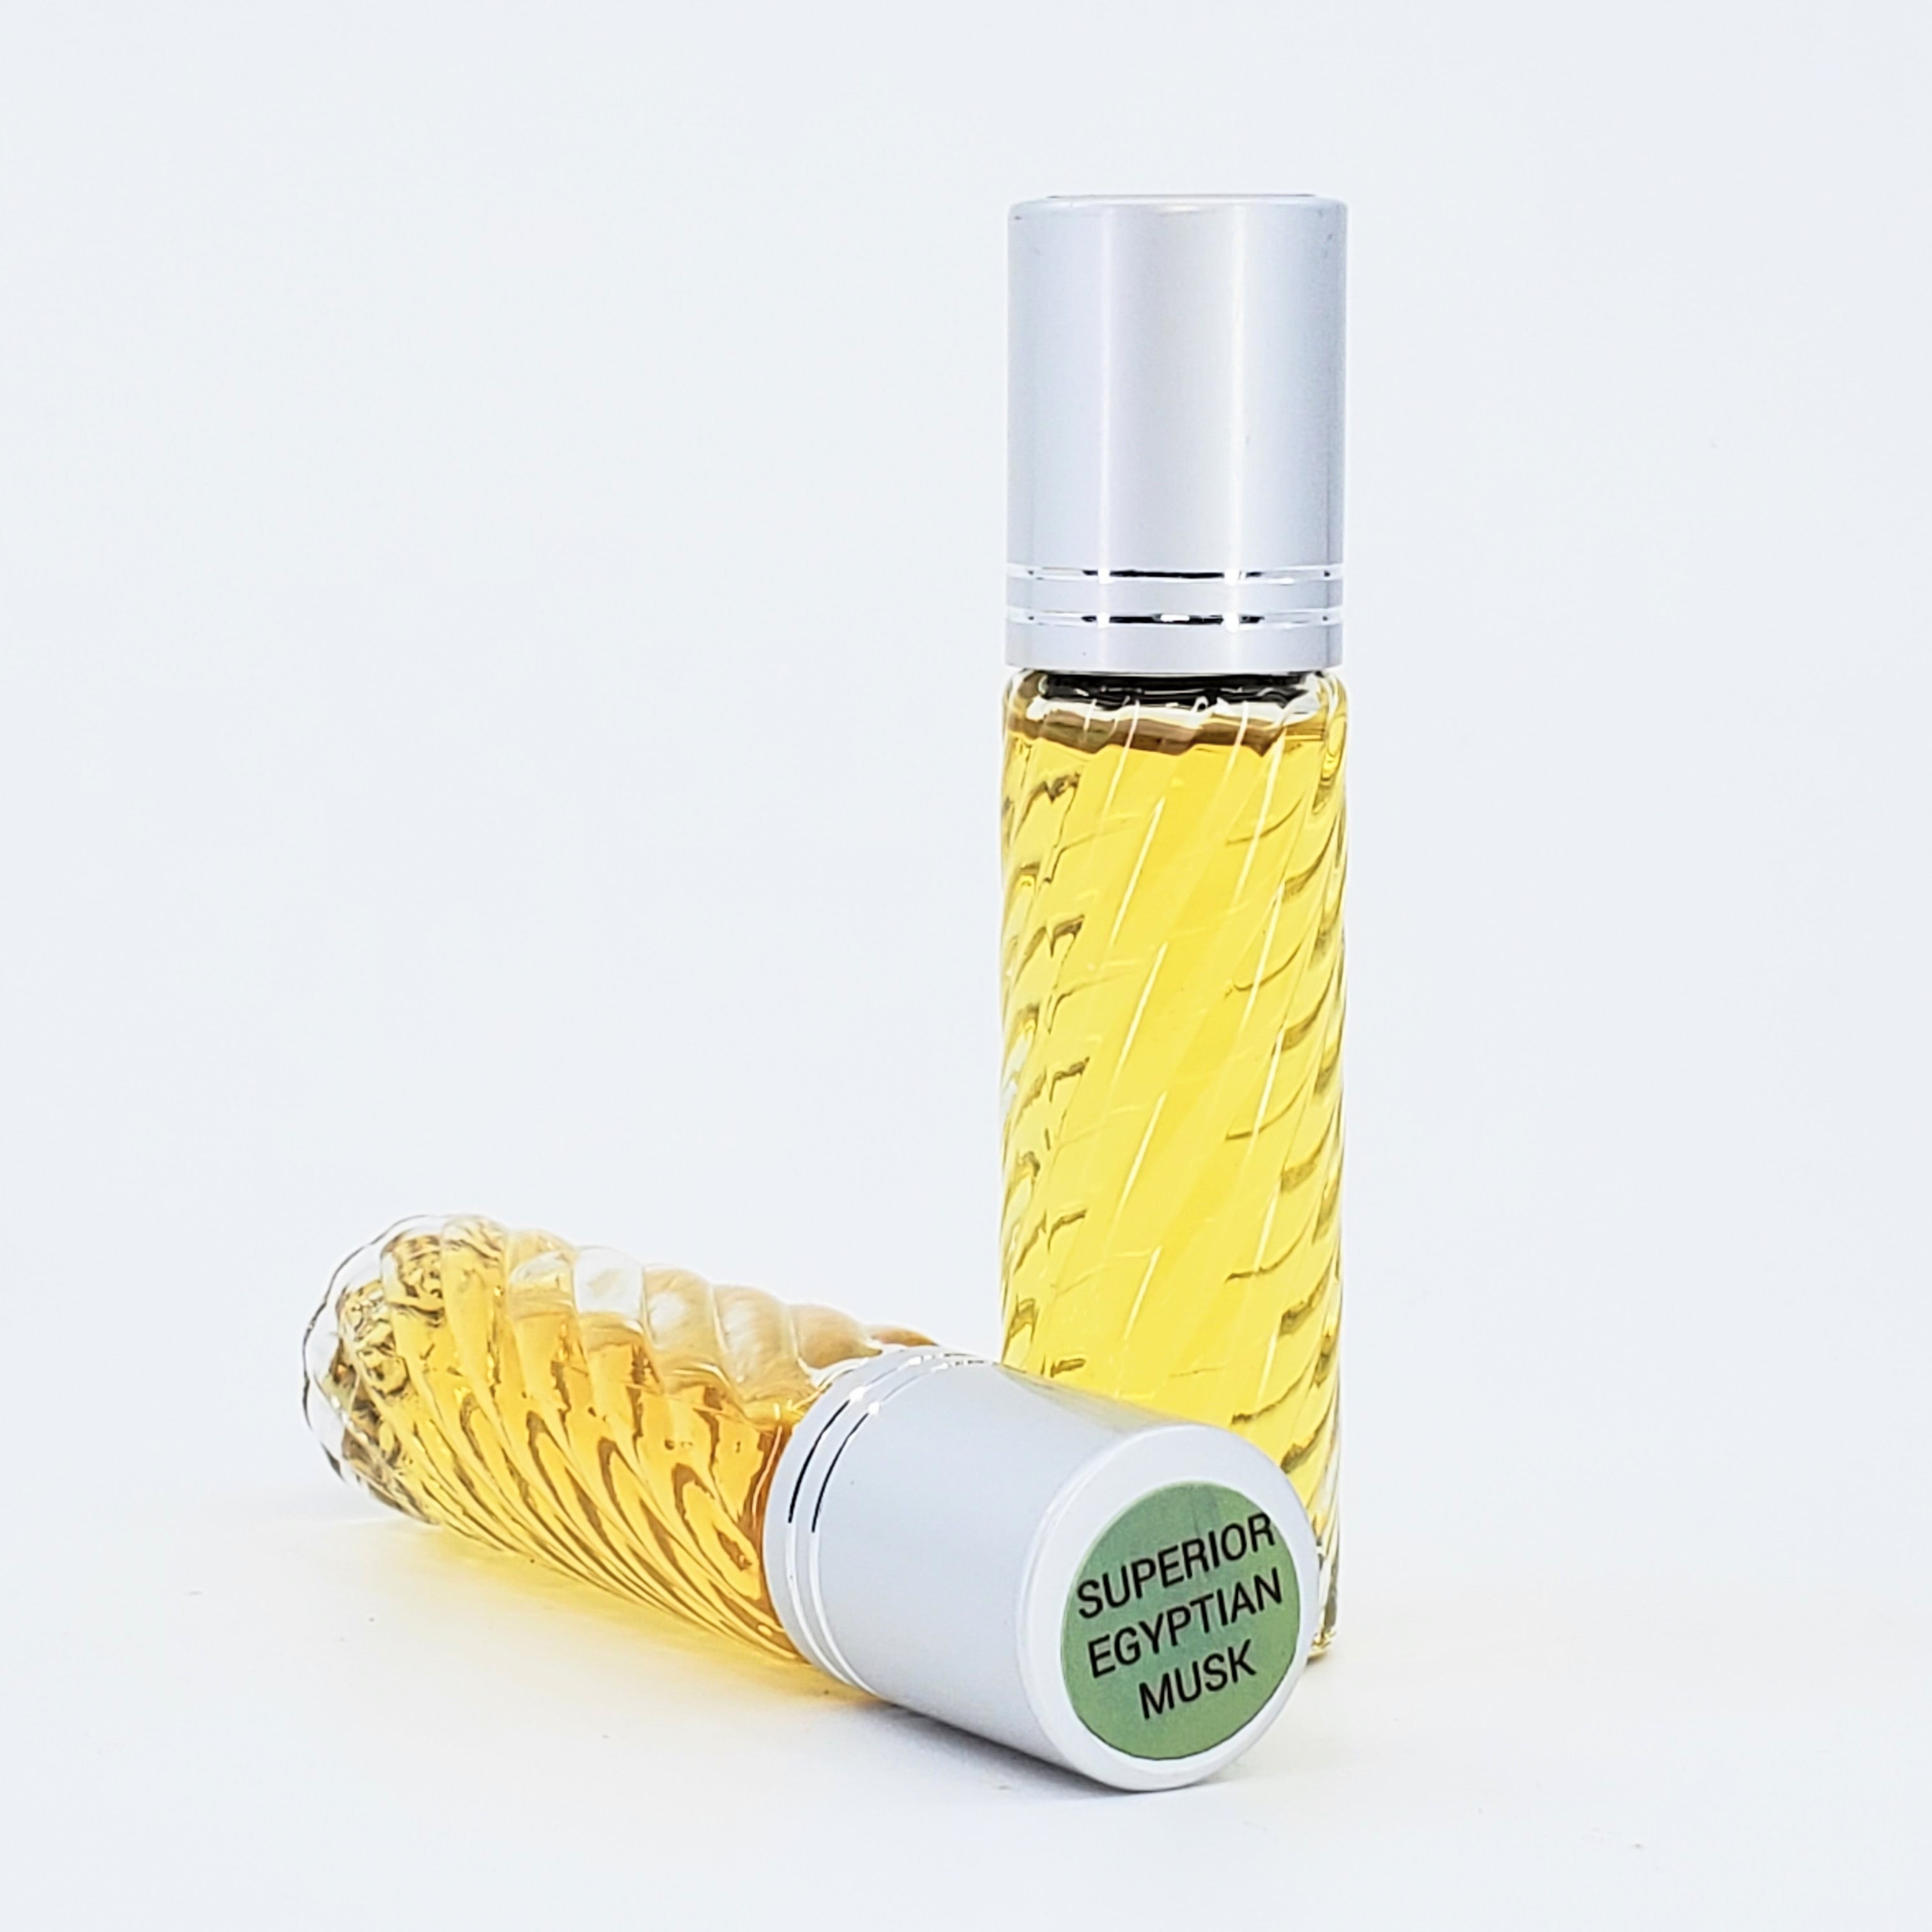 Vanilla Musk Pure Perfume Oil  The Mockingbird Apothecary & General Store